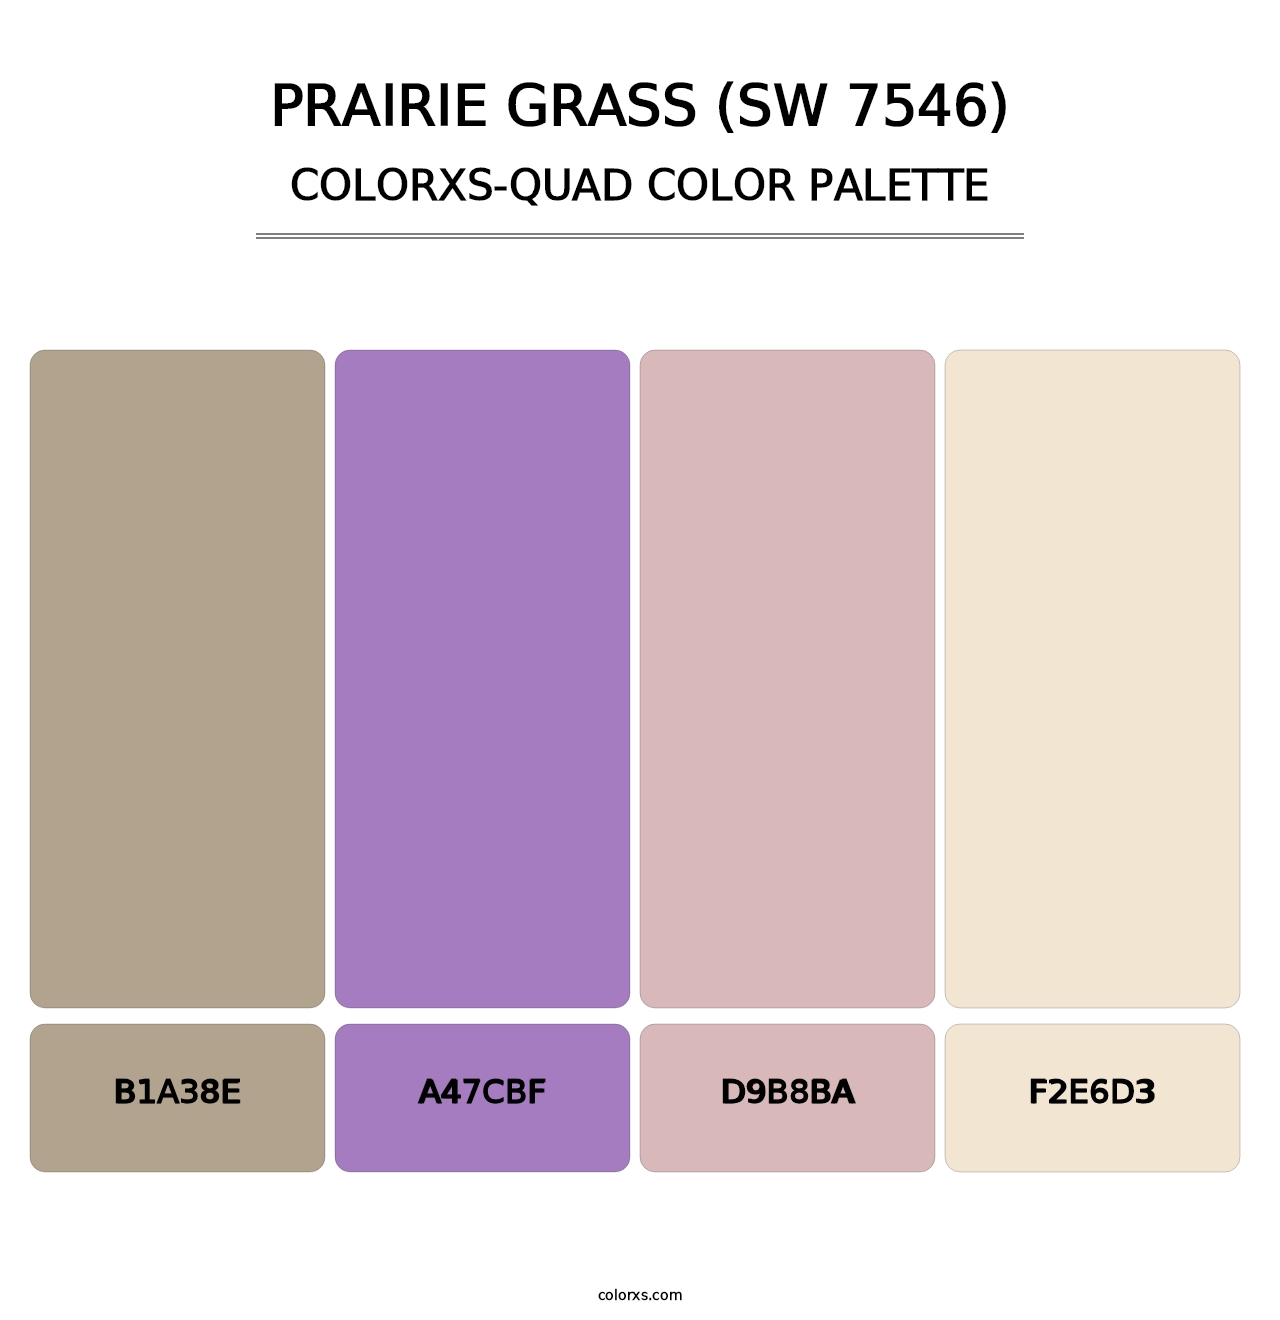 Prairie Grass (SW 7546) - Colorxs Quad Palette